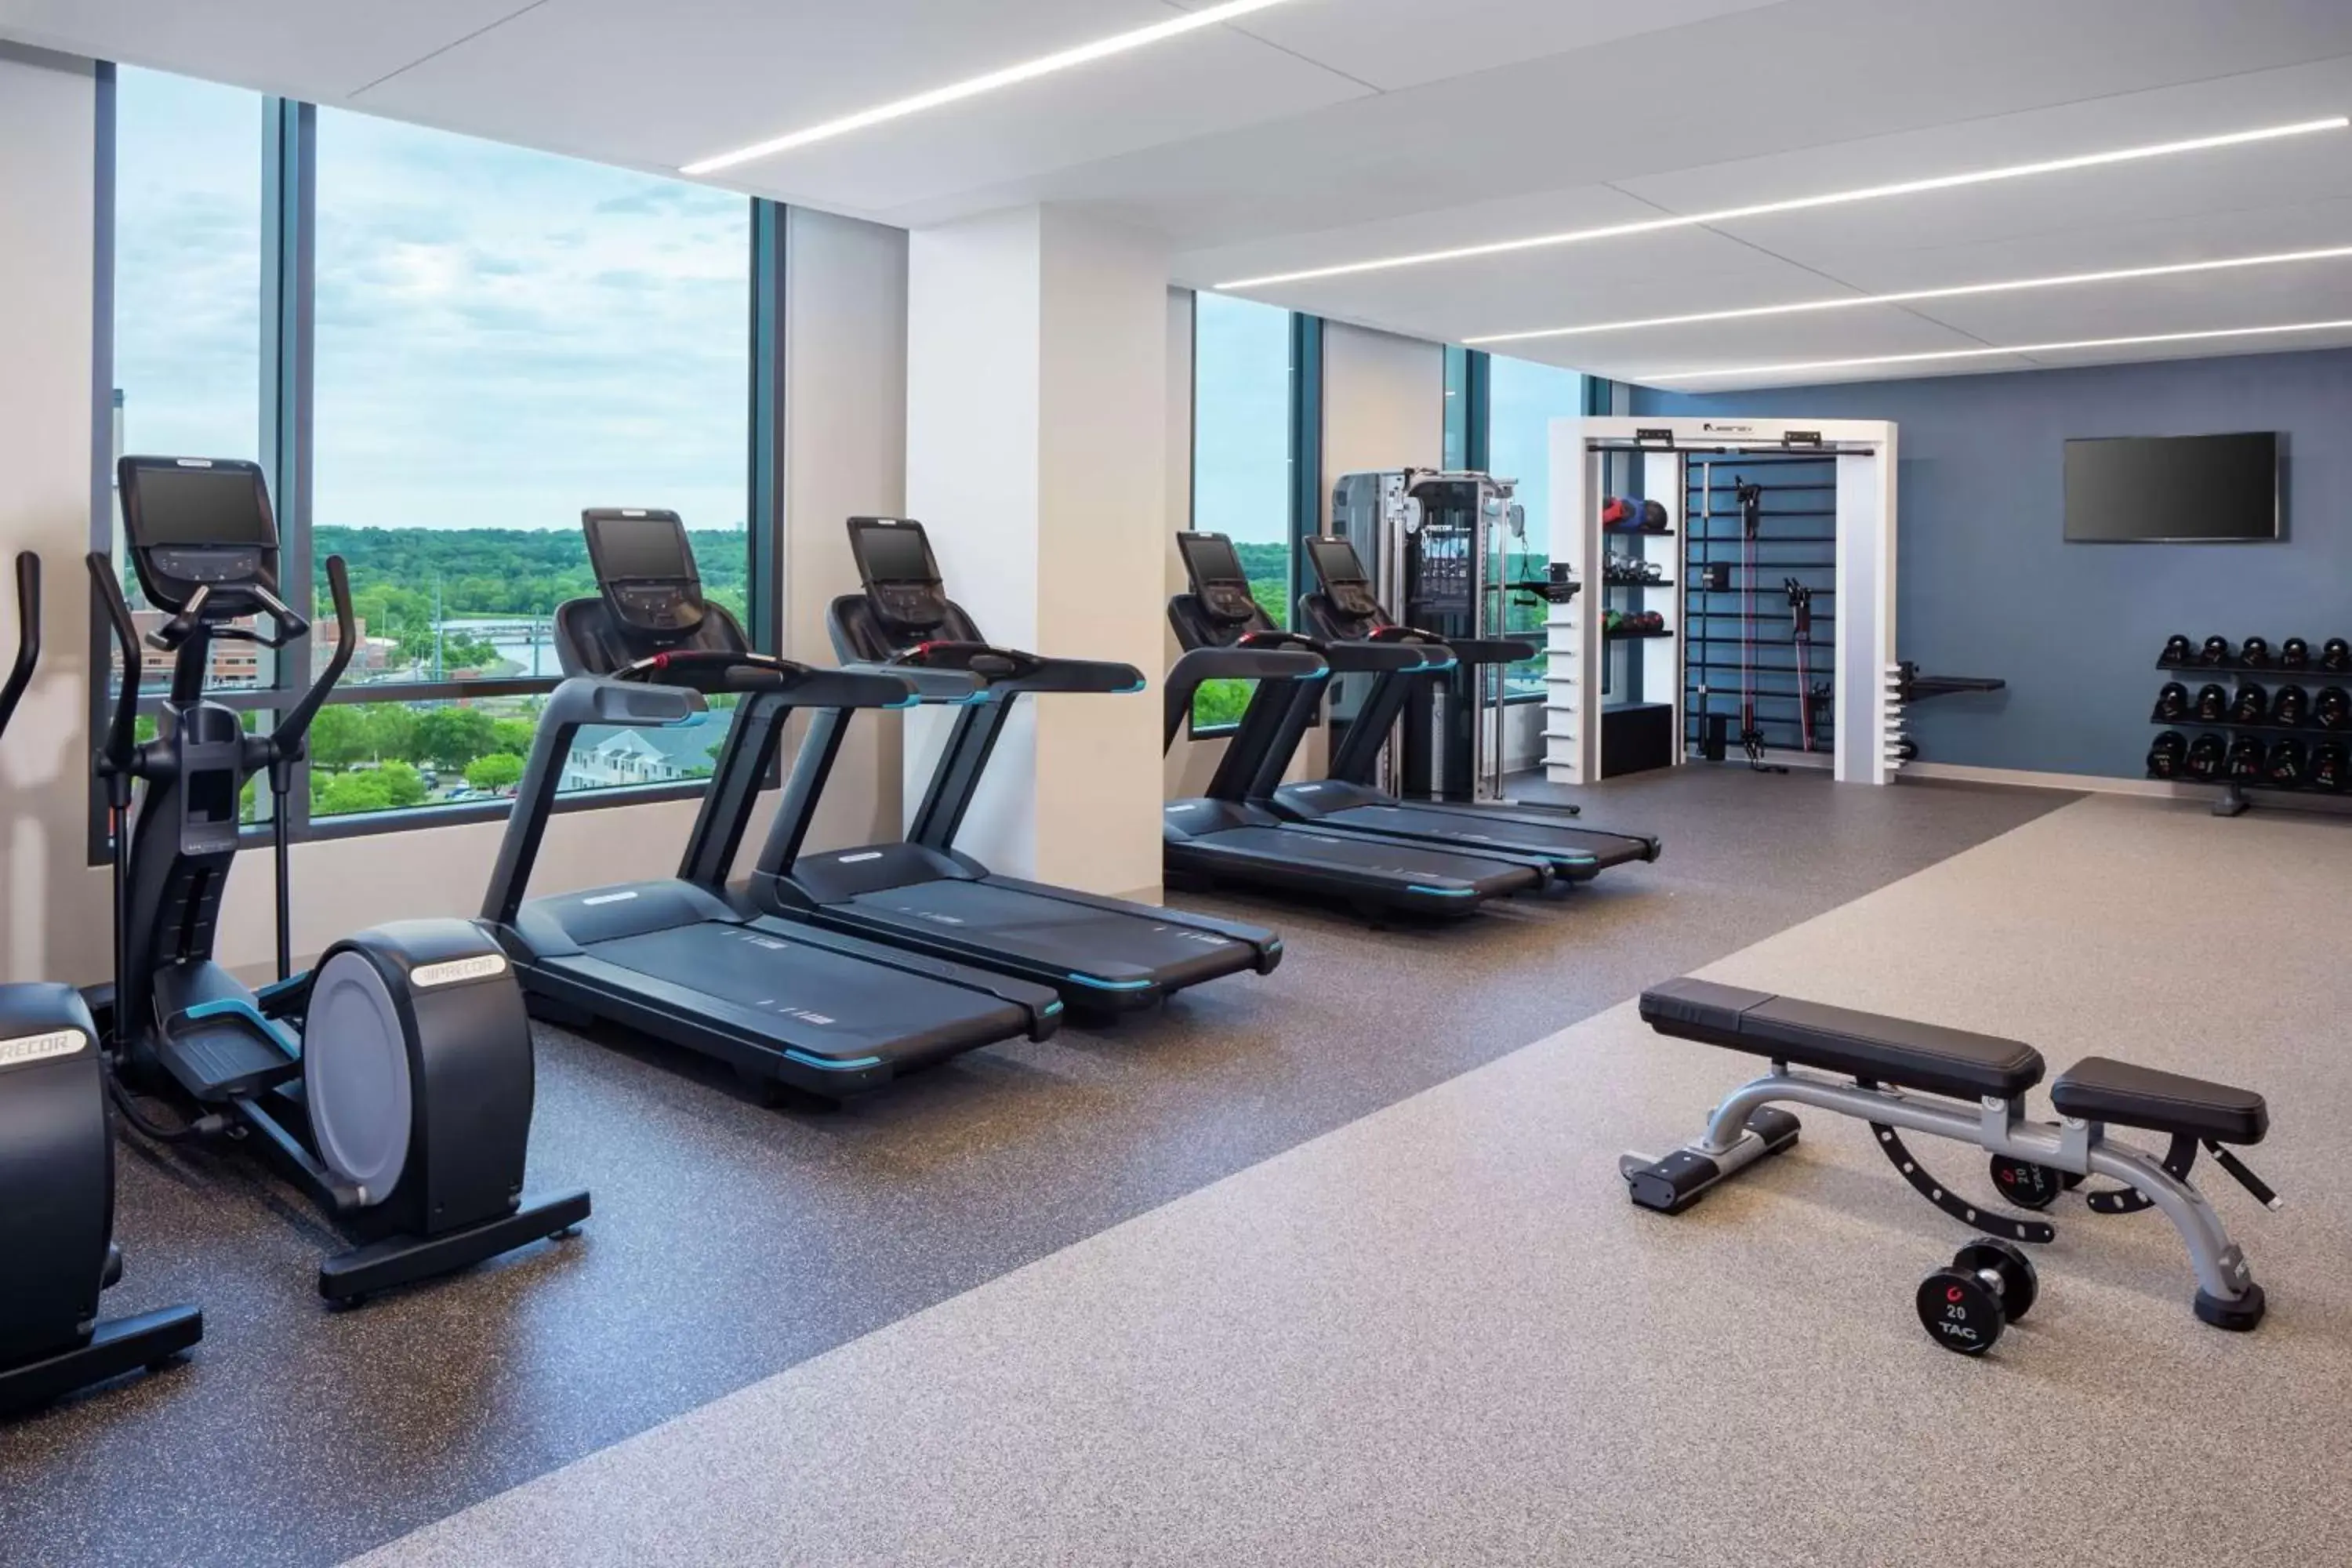 Fitness centre/facilities, Fitness Center/Facilities in Hilton Rochester Mayo Clinic Area